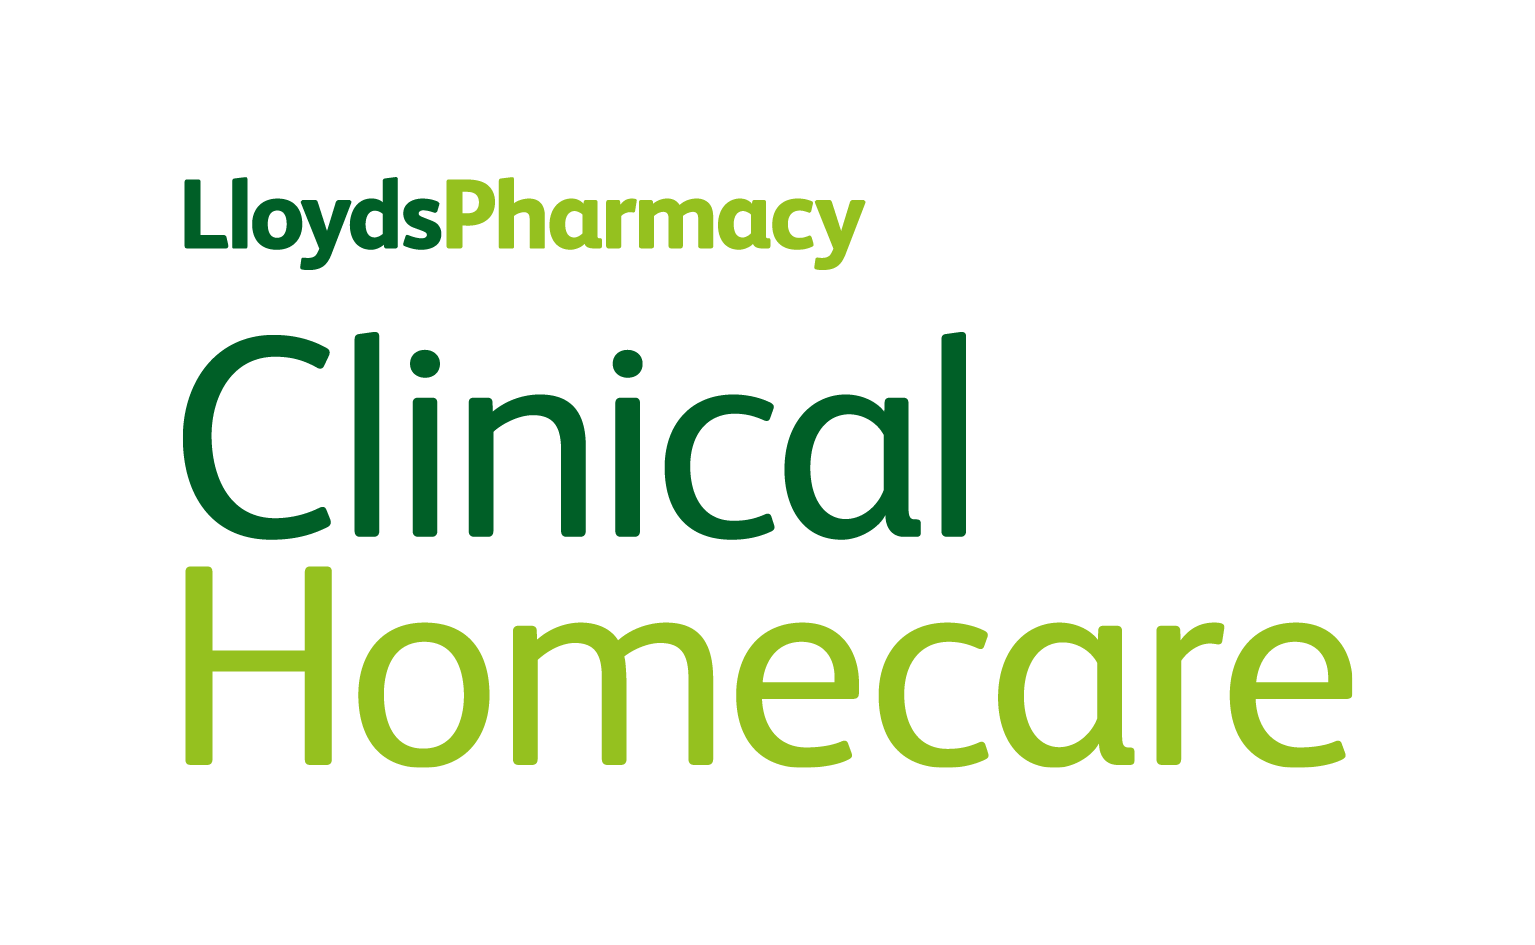 Lloyds Pharmacy Clinical Homecare Careers